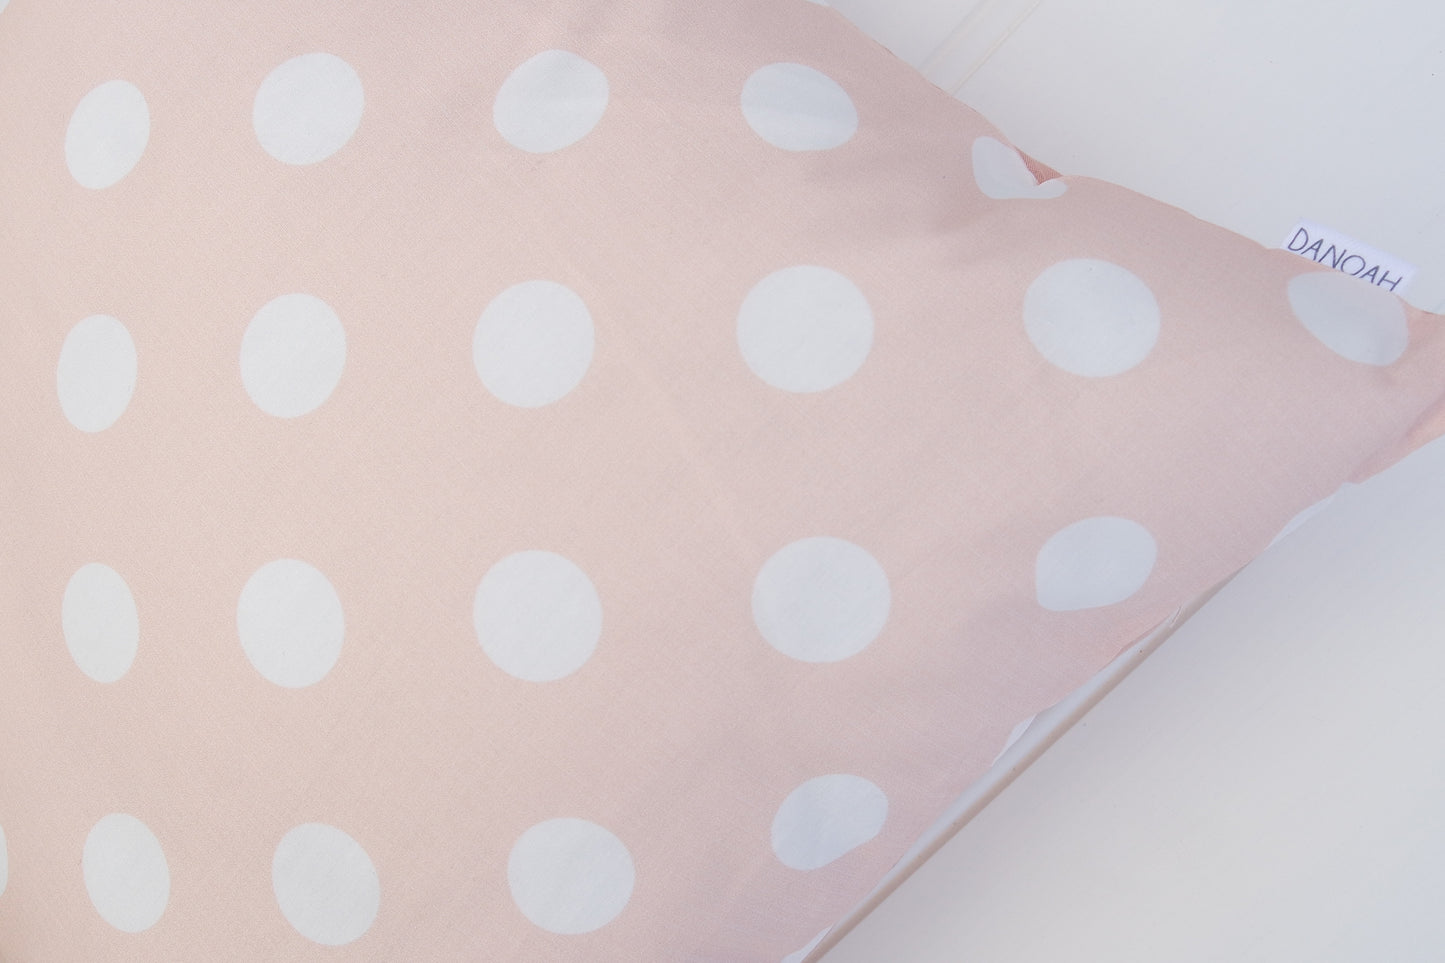 Pink Polka Dot Cushion Cover